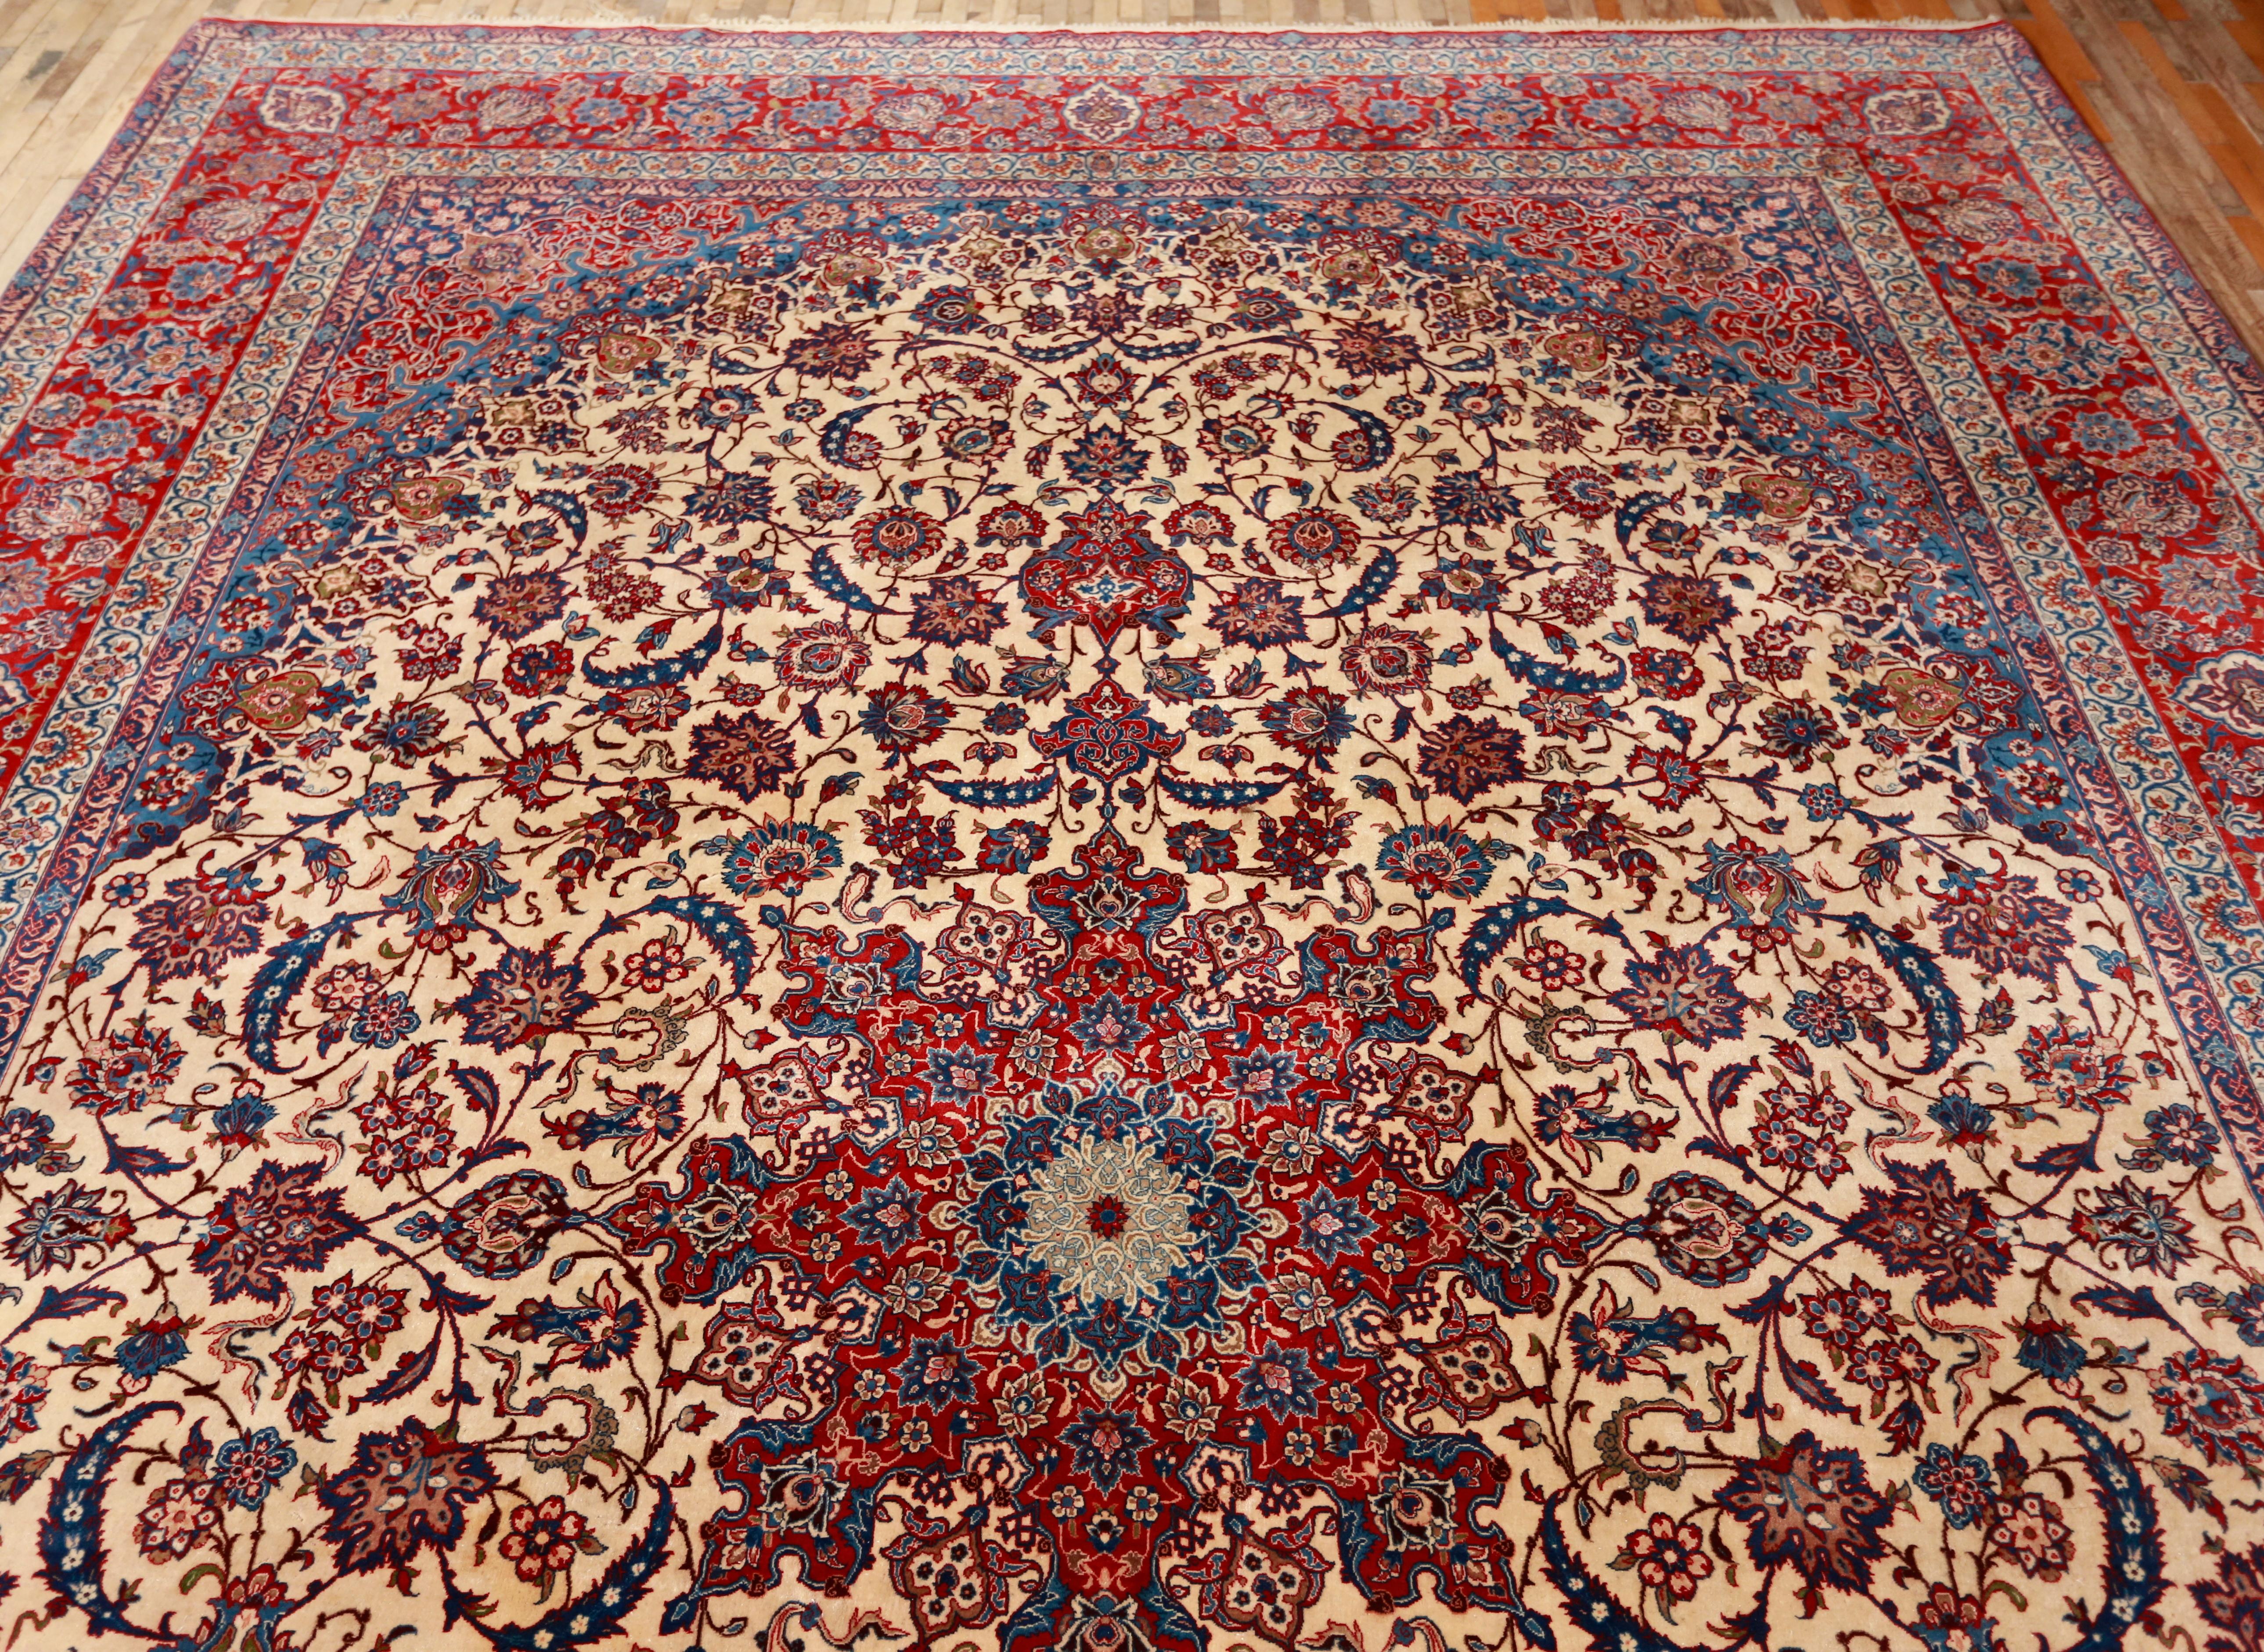 Wool Isfahan Persian carpet 400 X 260 cm million knots per m2 For Sale